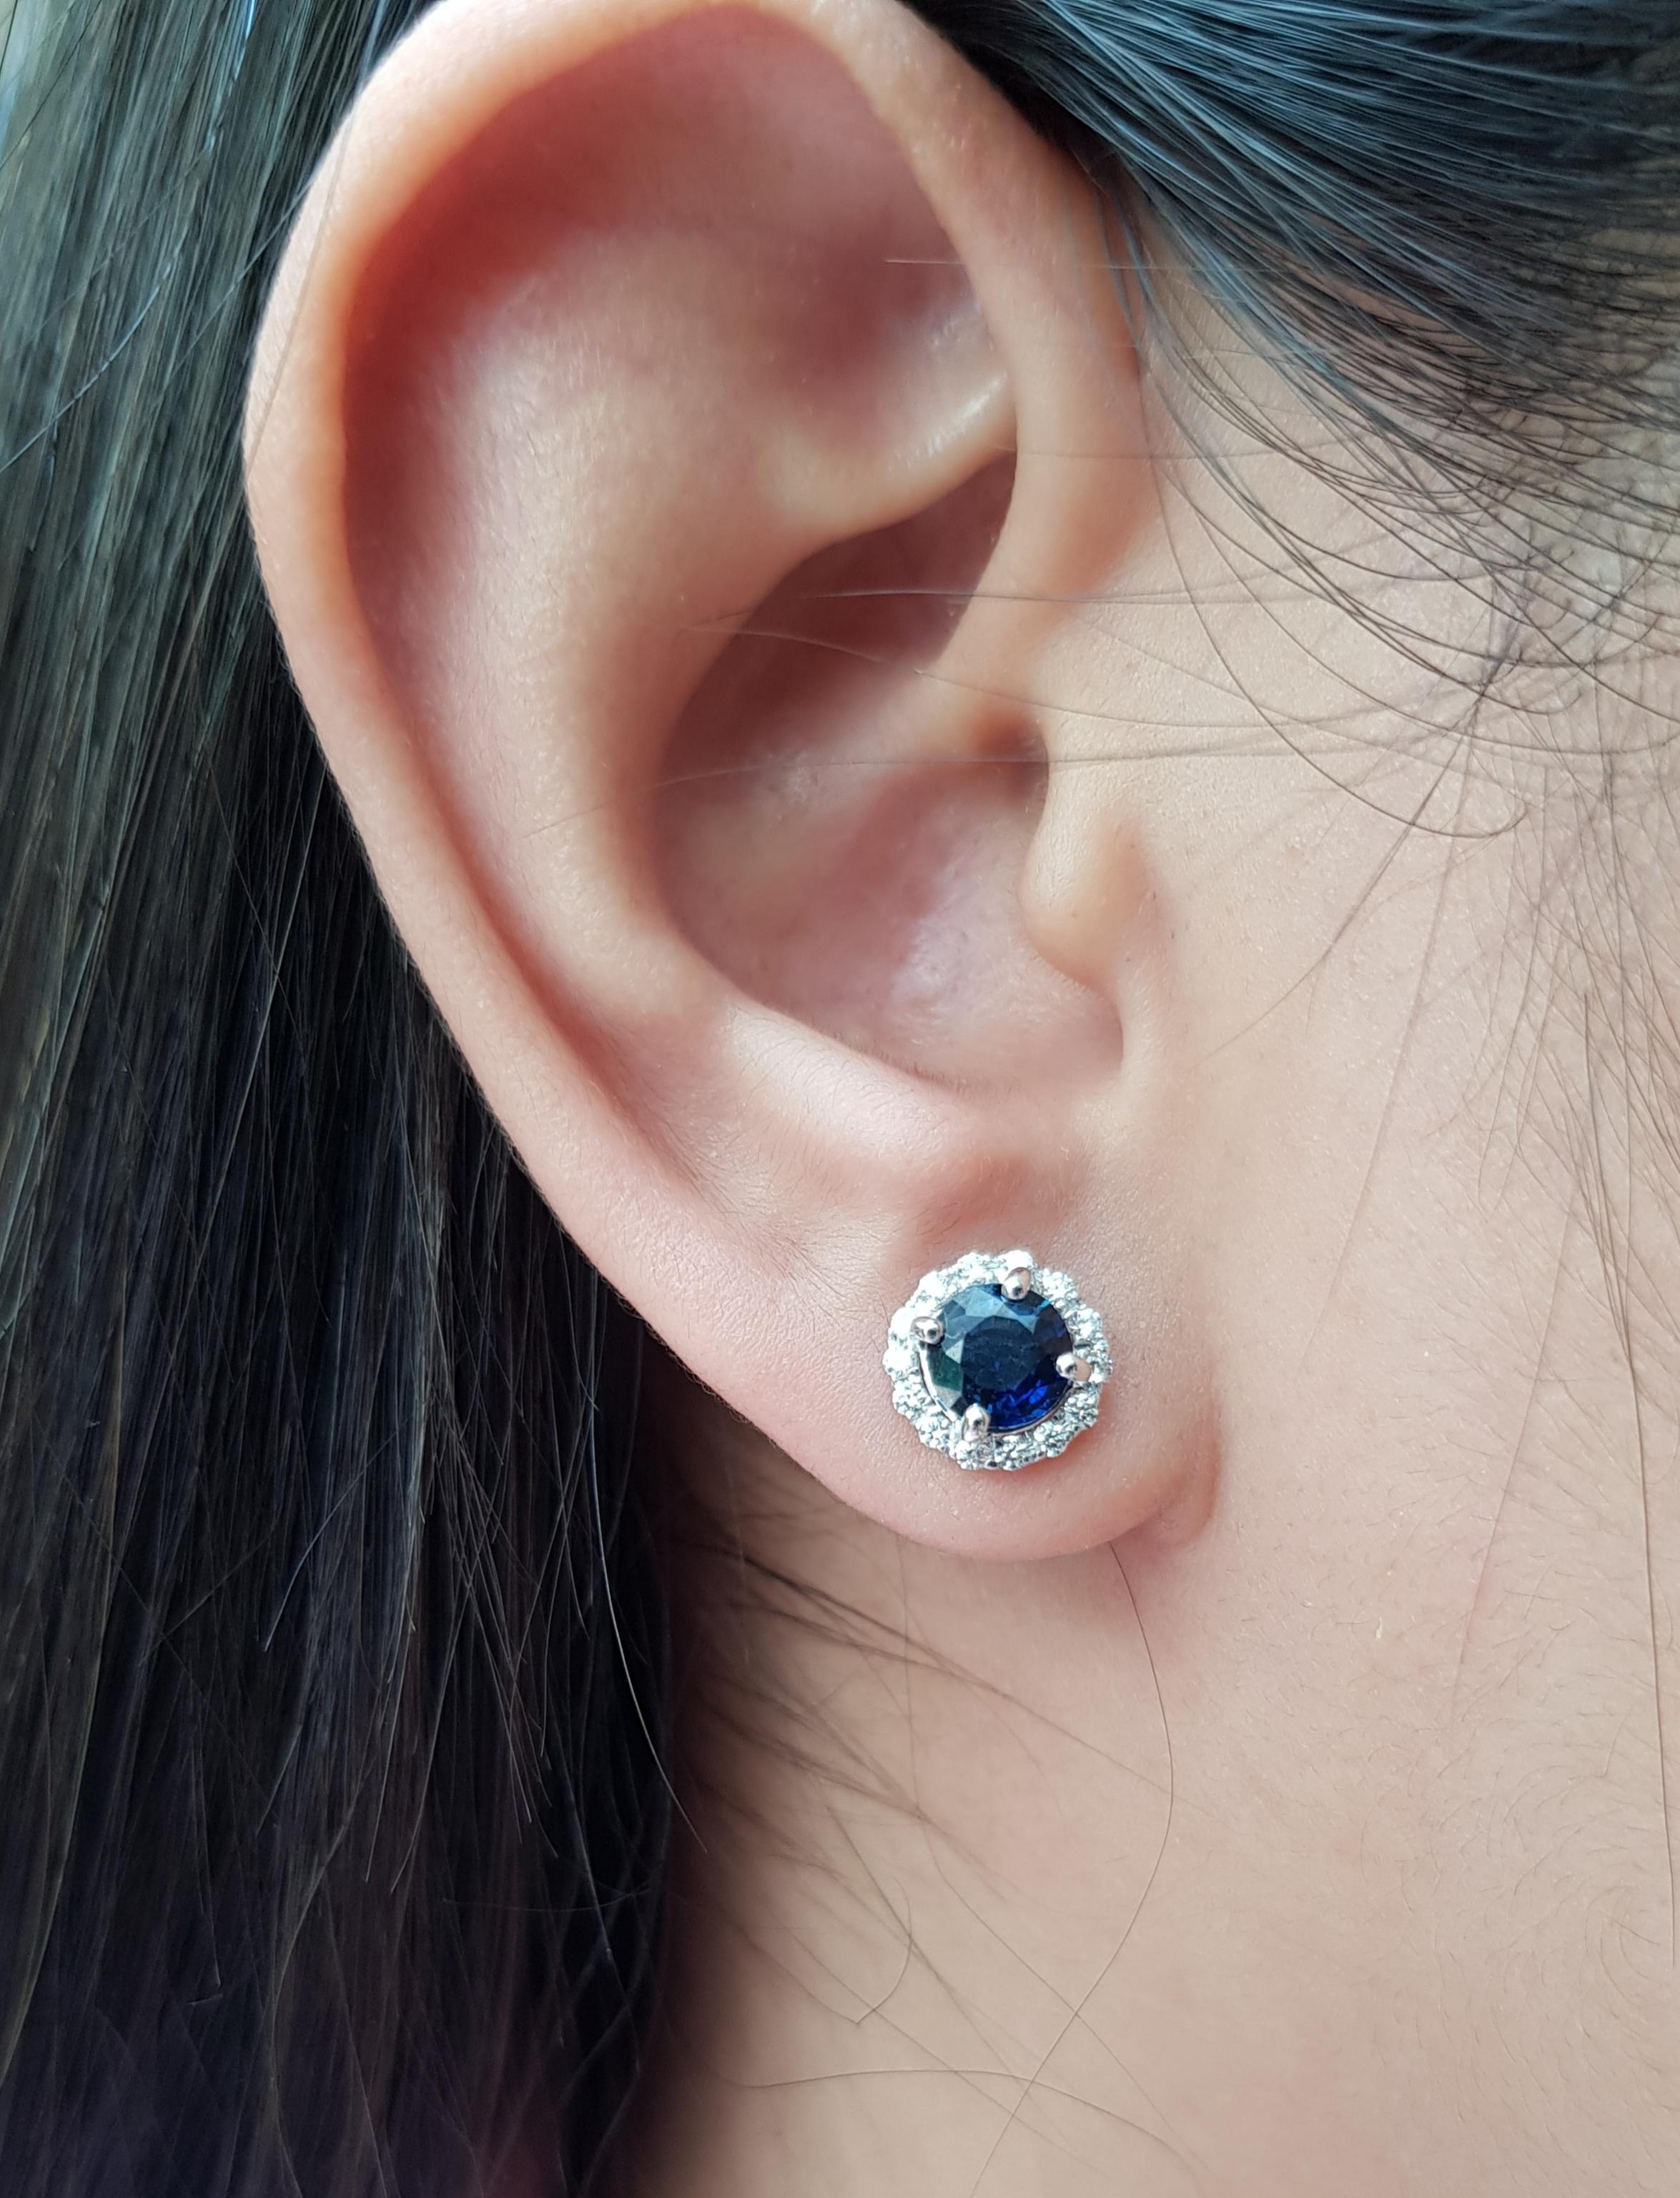 Blue Sapphire 1.60 carats with Diamond 0.26 carat Earrings set in 18 Karat White Gold Settings

Width: 0.8 cm
Length: 0.8cm 

